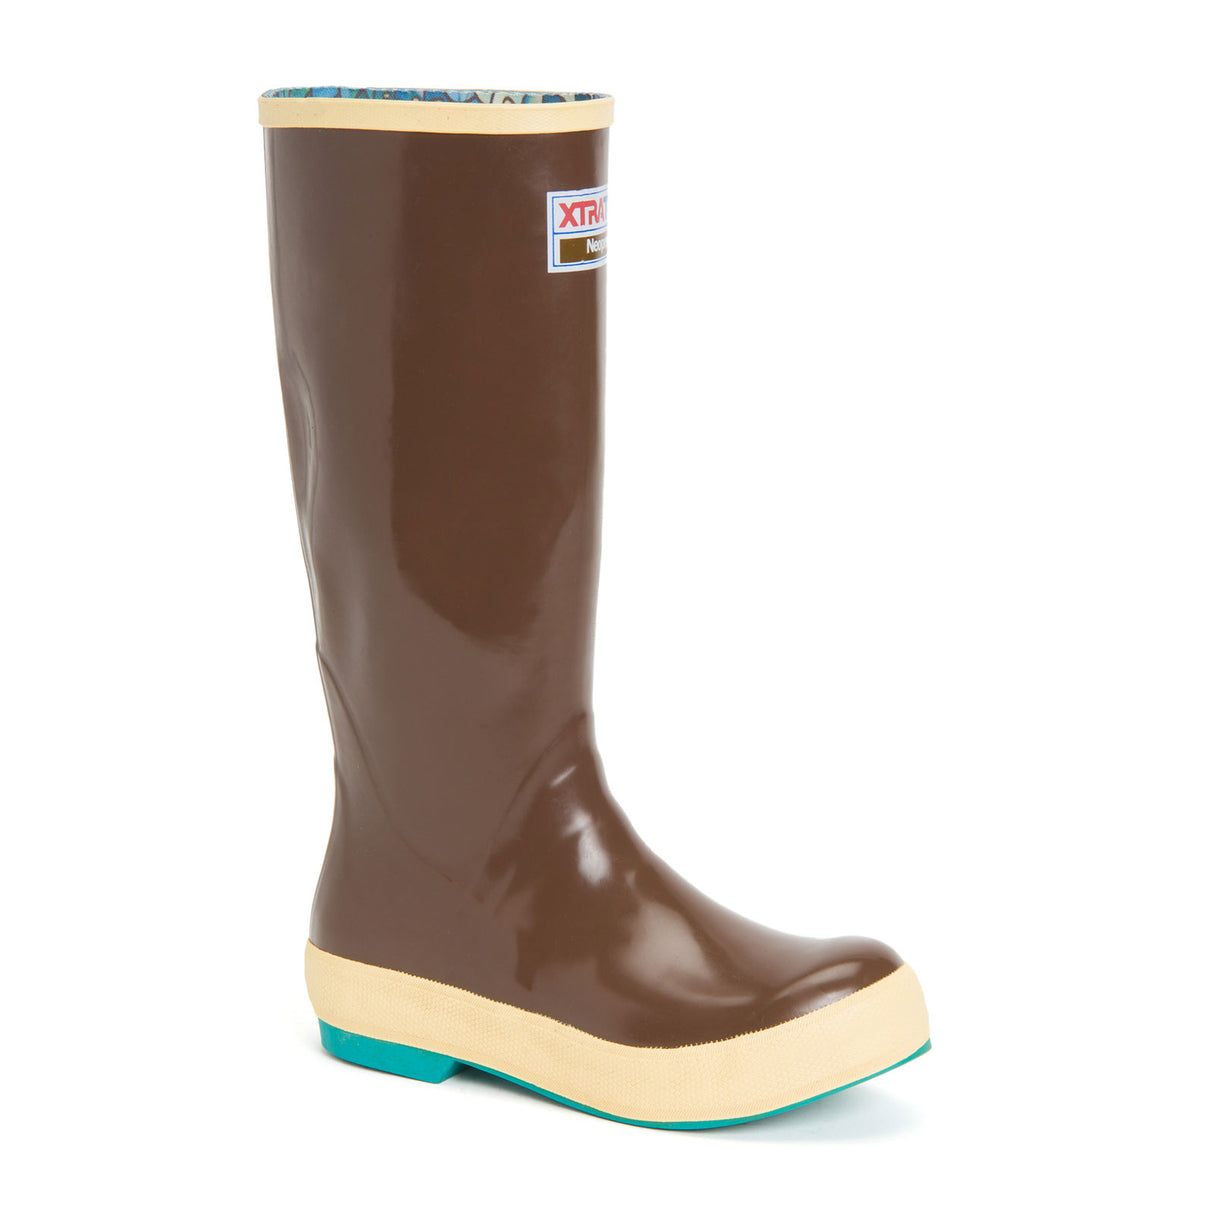 XtraTuf Fishe Wear 15" Legacy Rain Boot (Women) - Brown/Totally Tarpon Boots - Rain - Mid - The Heel Shoe Fitters